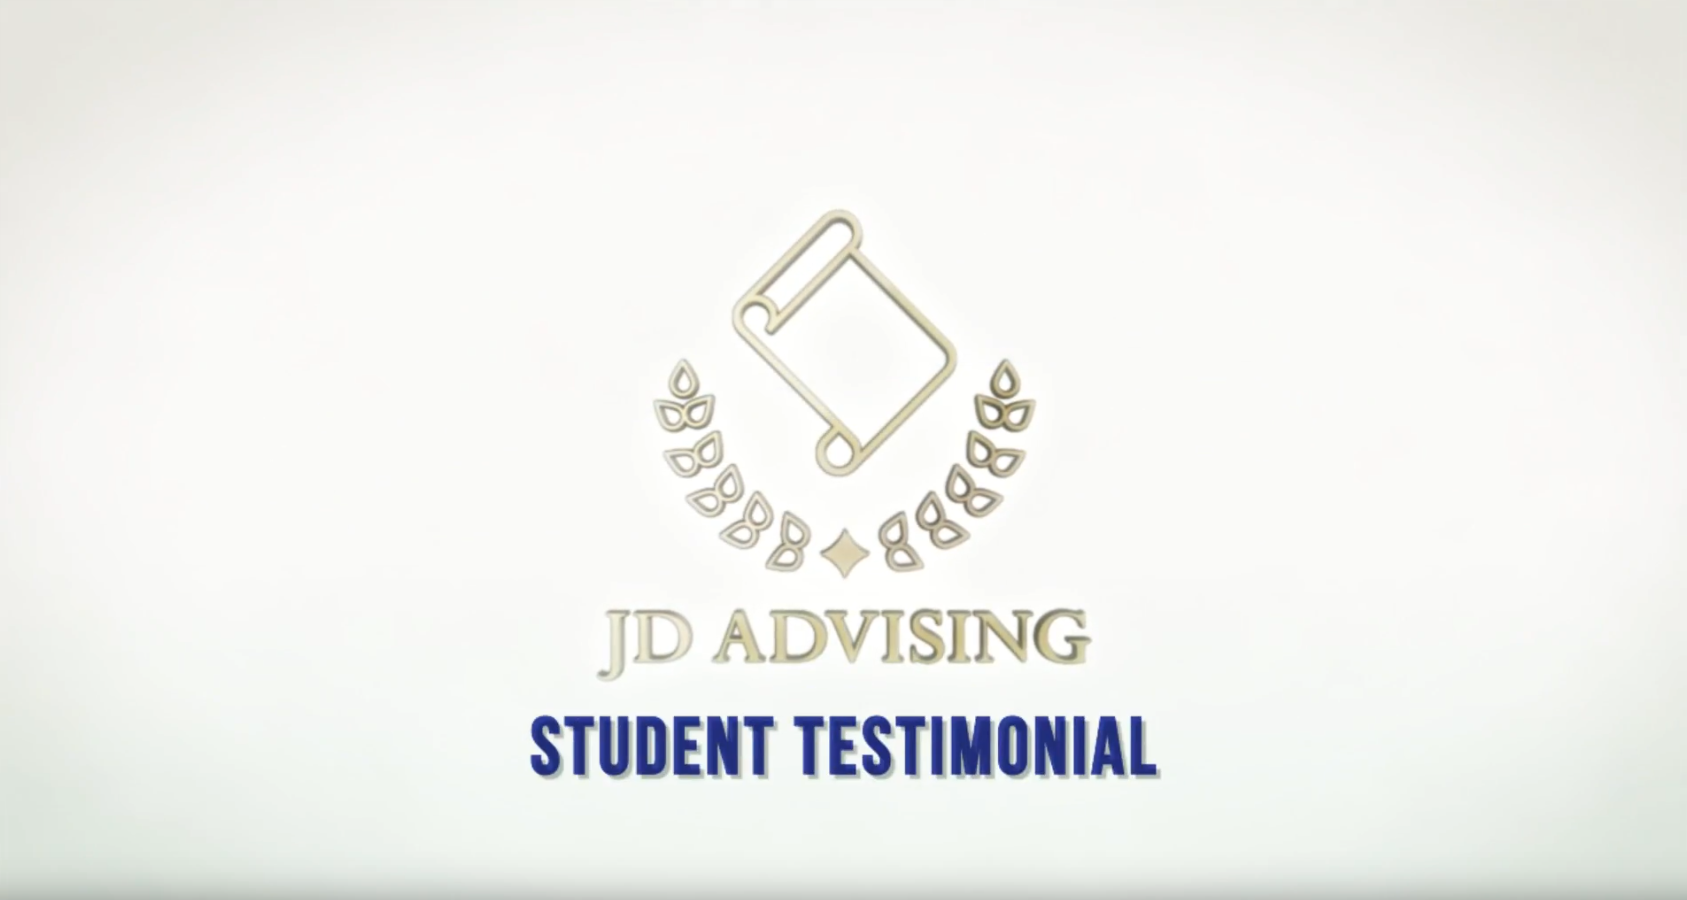 JD Advising UBE course student testimonial